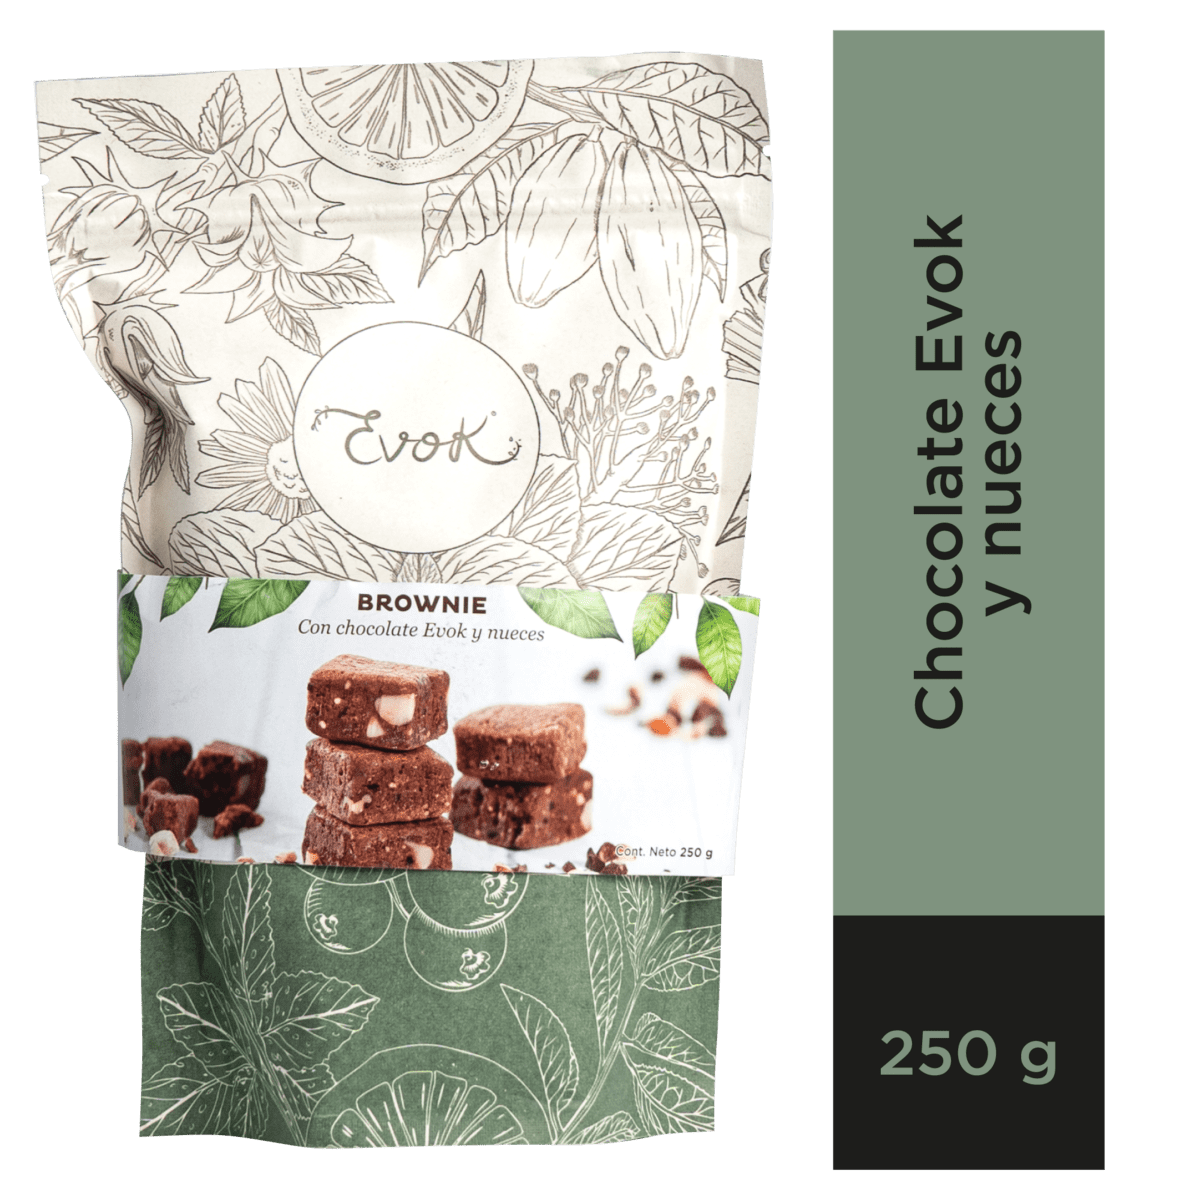 https://www.evok.com.co/wp-content/uploads/2021/05/Evok-brownie-con-chocolate-evok-nueces-2.png